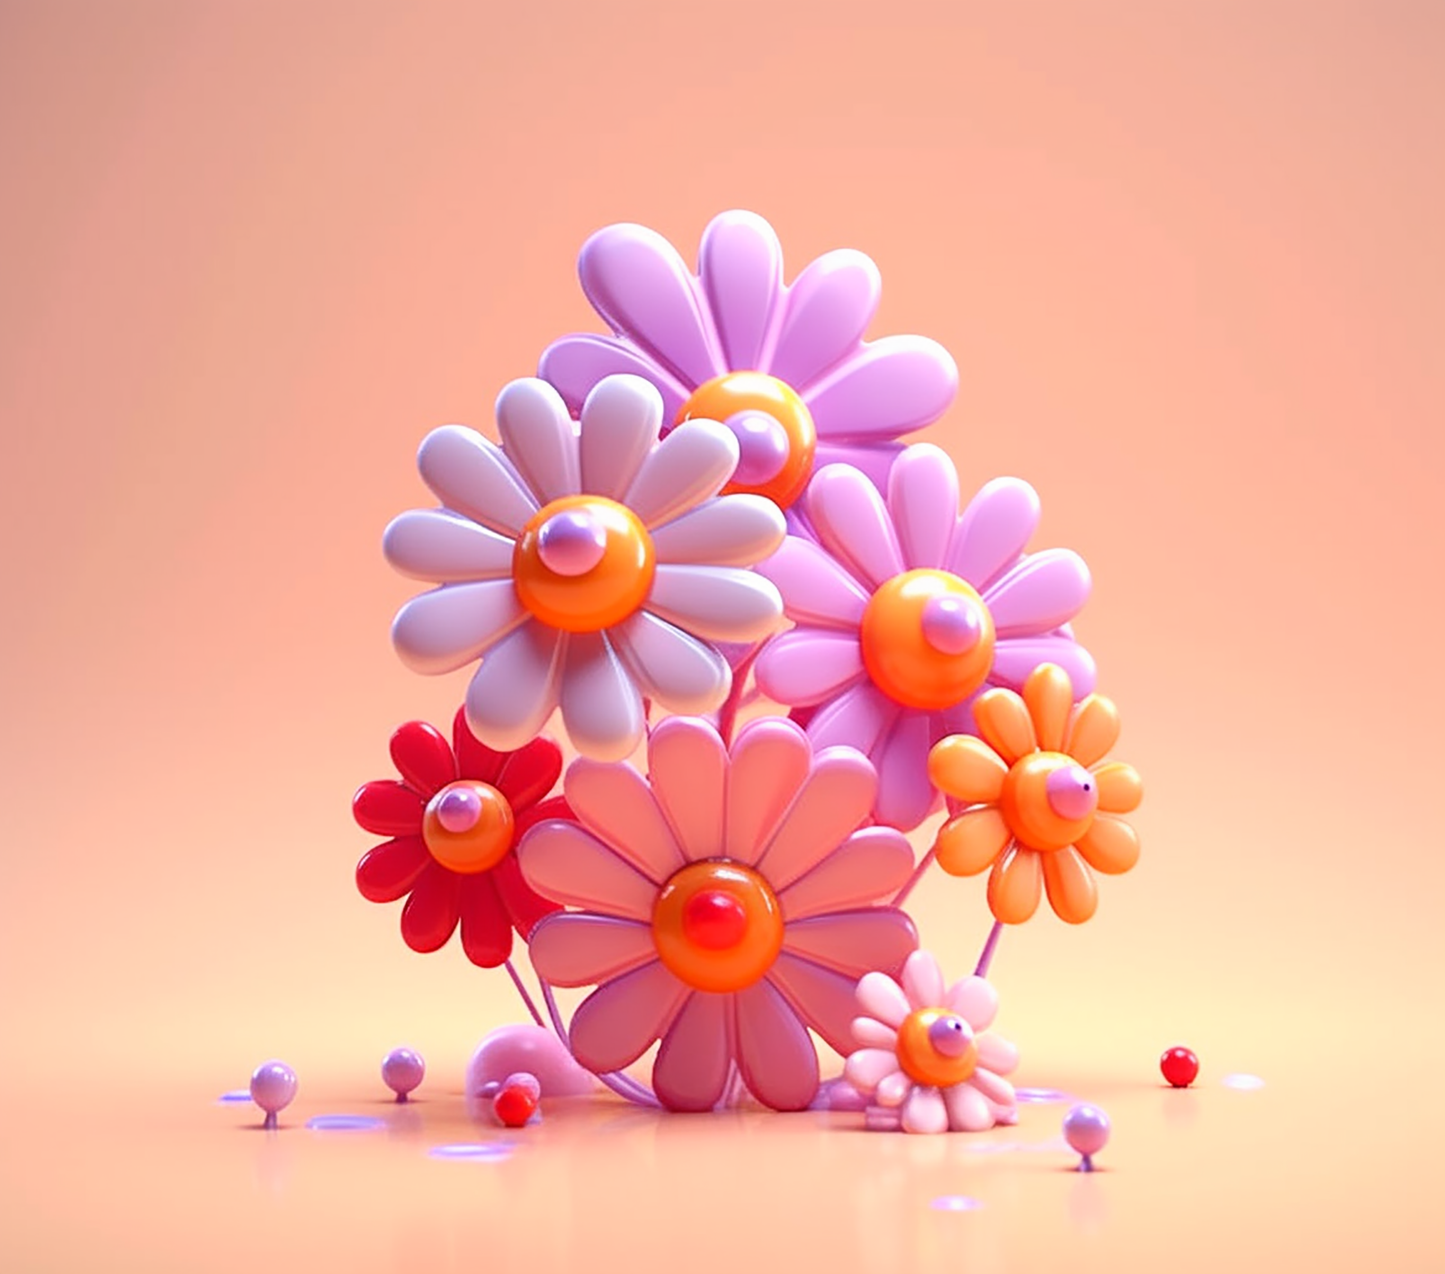 3D CUTE COLORFUL FLOWERS